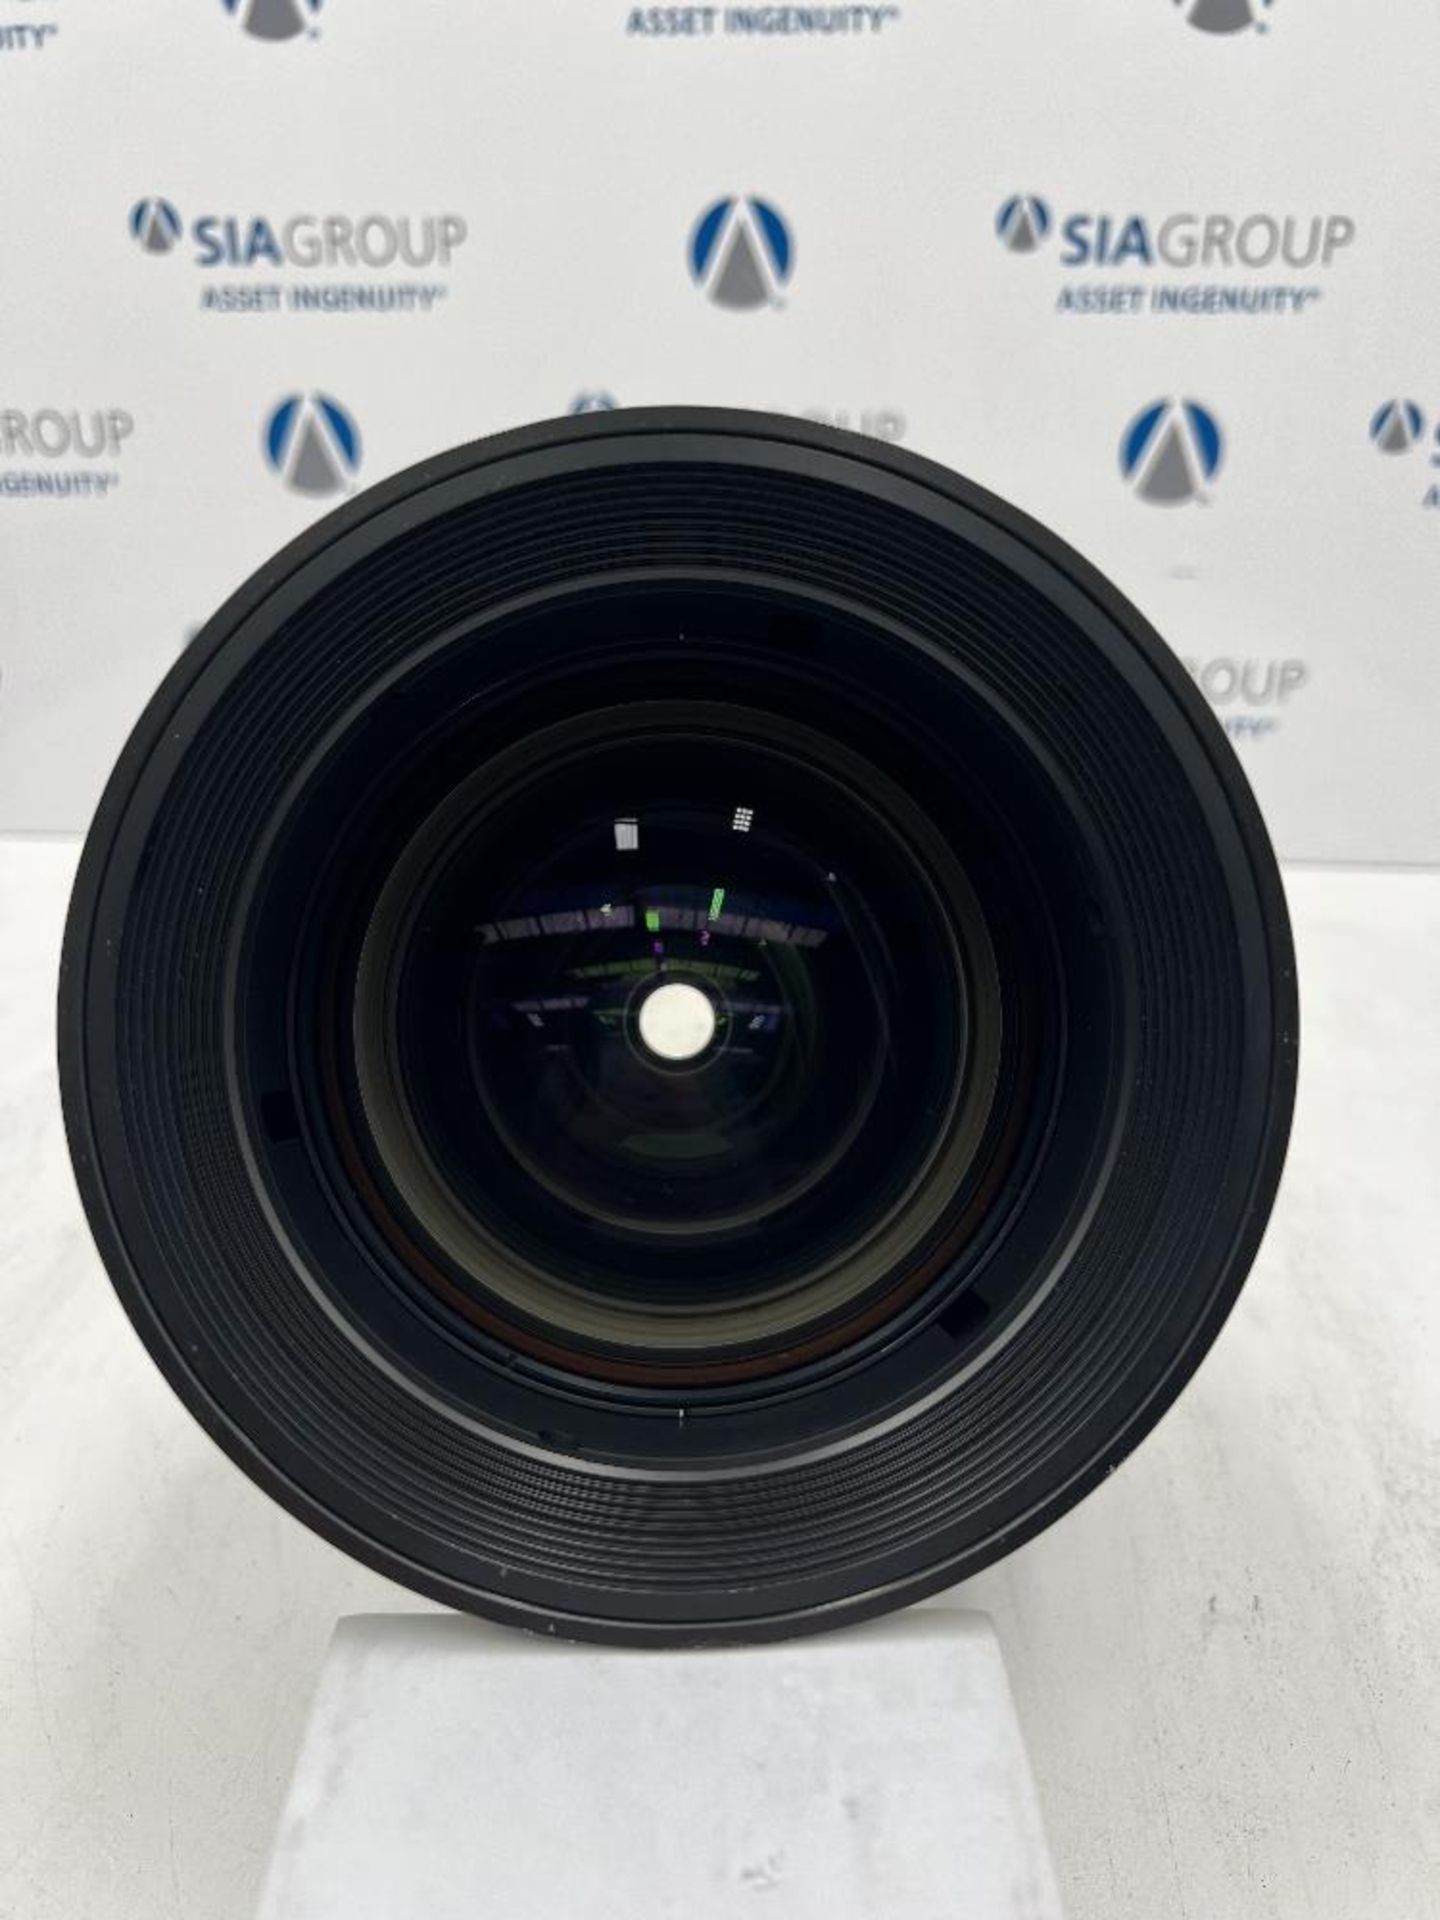 Panasonic ET-D75LE10 1.3-1.7 Zoom Lens With Carrier Case - Image 7 of 10